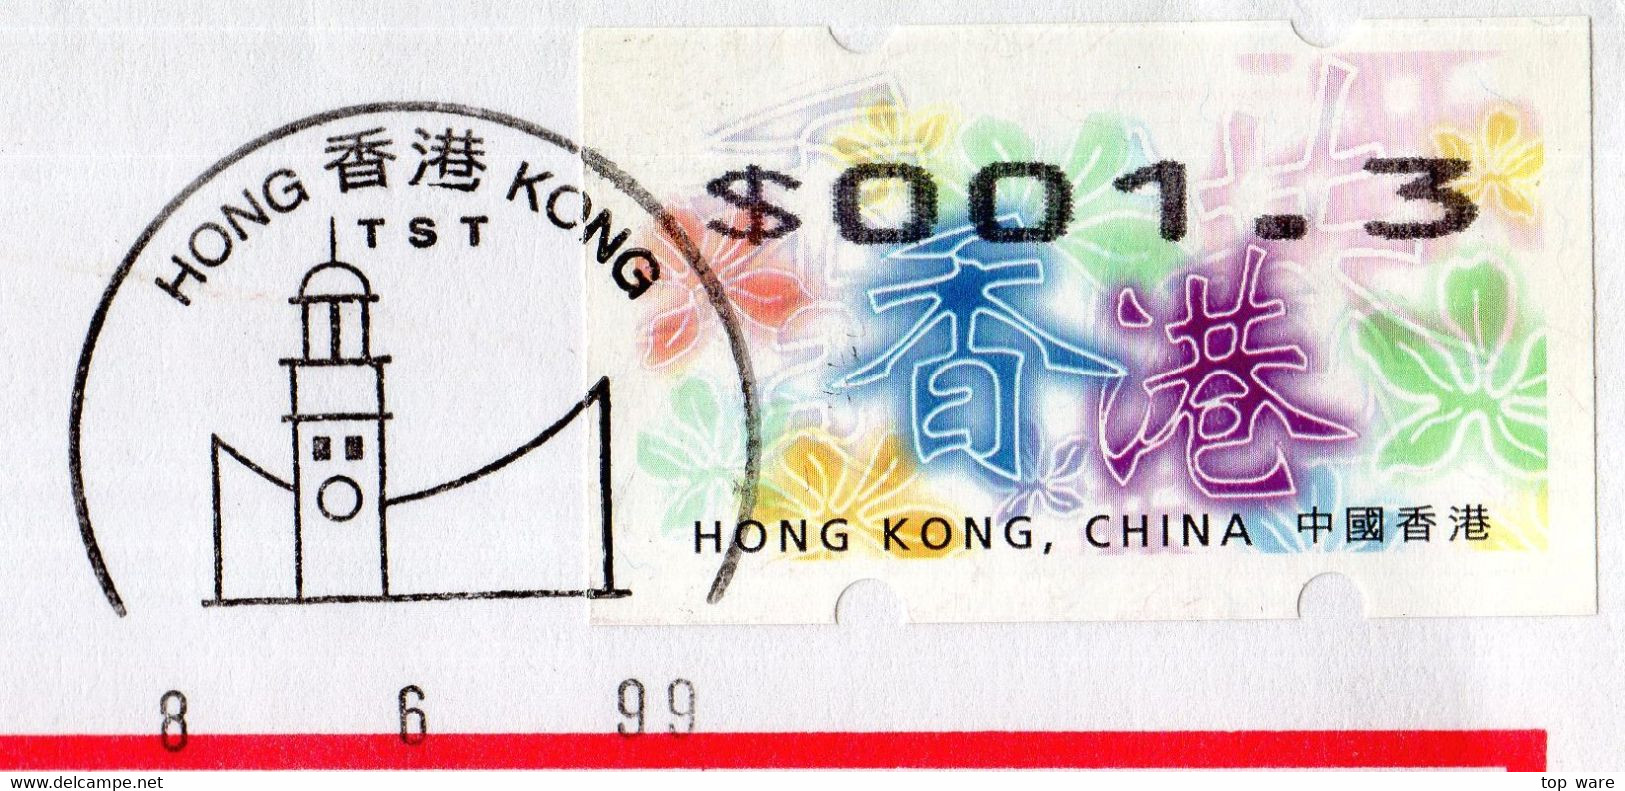 Hong Kong China ATM Stamps, 1998, Orchid Bloom Bauhinia, $1.30 On TST Letter 8.6.99 Receipt, Nagler N718, Frama Hongkong - Distributeurs